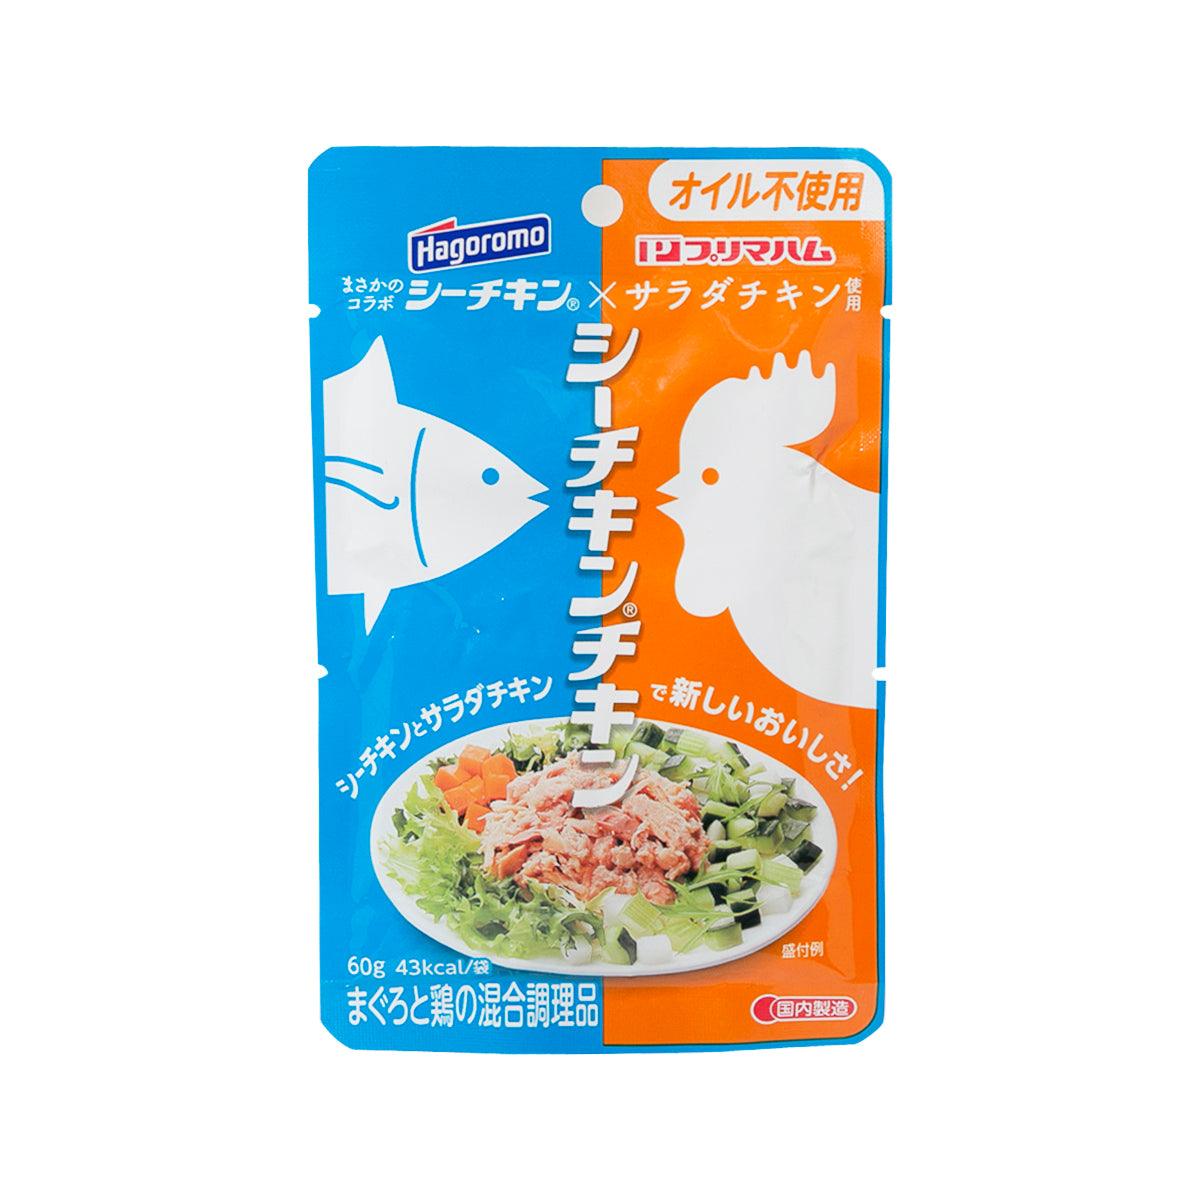 Hagoromo Seachicken Jun Tuna Flake In Natural Water No Salt Oil Added 3 X 70g S Search Results Moredeal Price Comparsion Website For E Shops